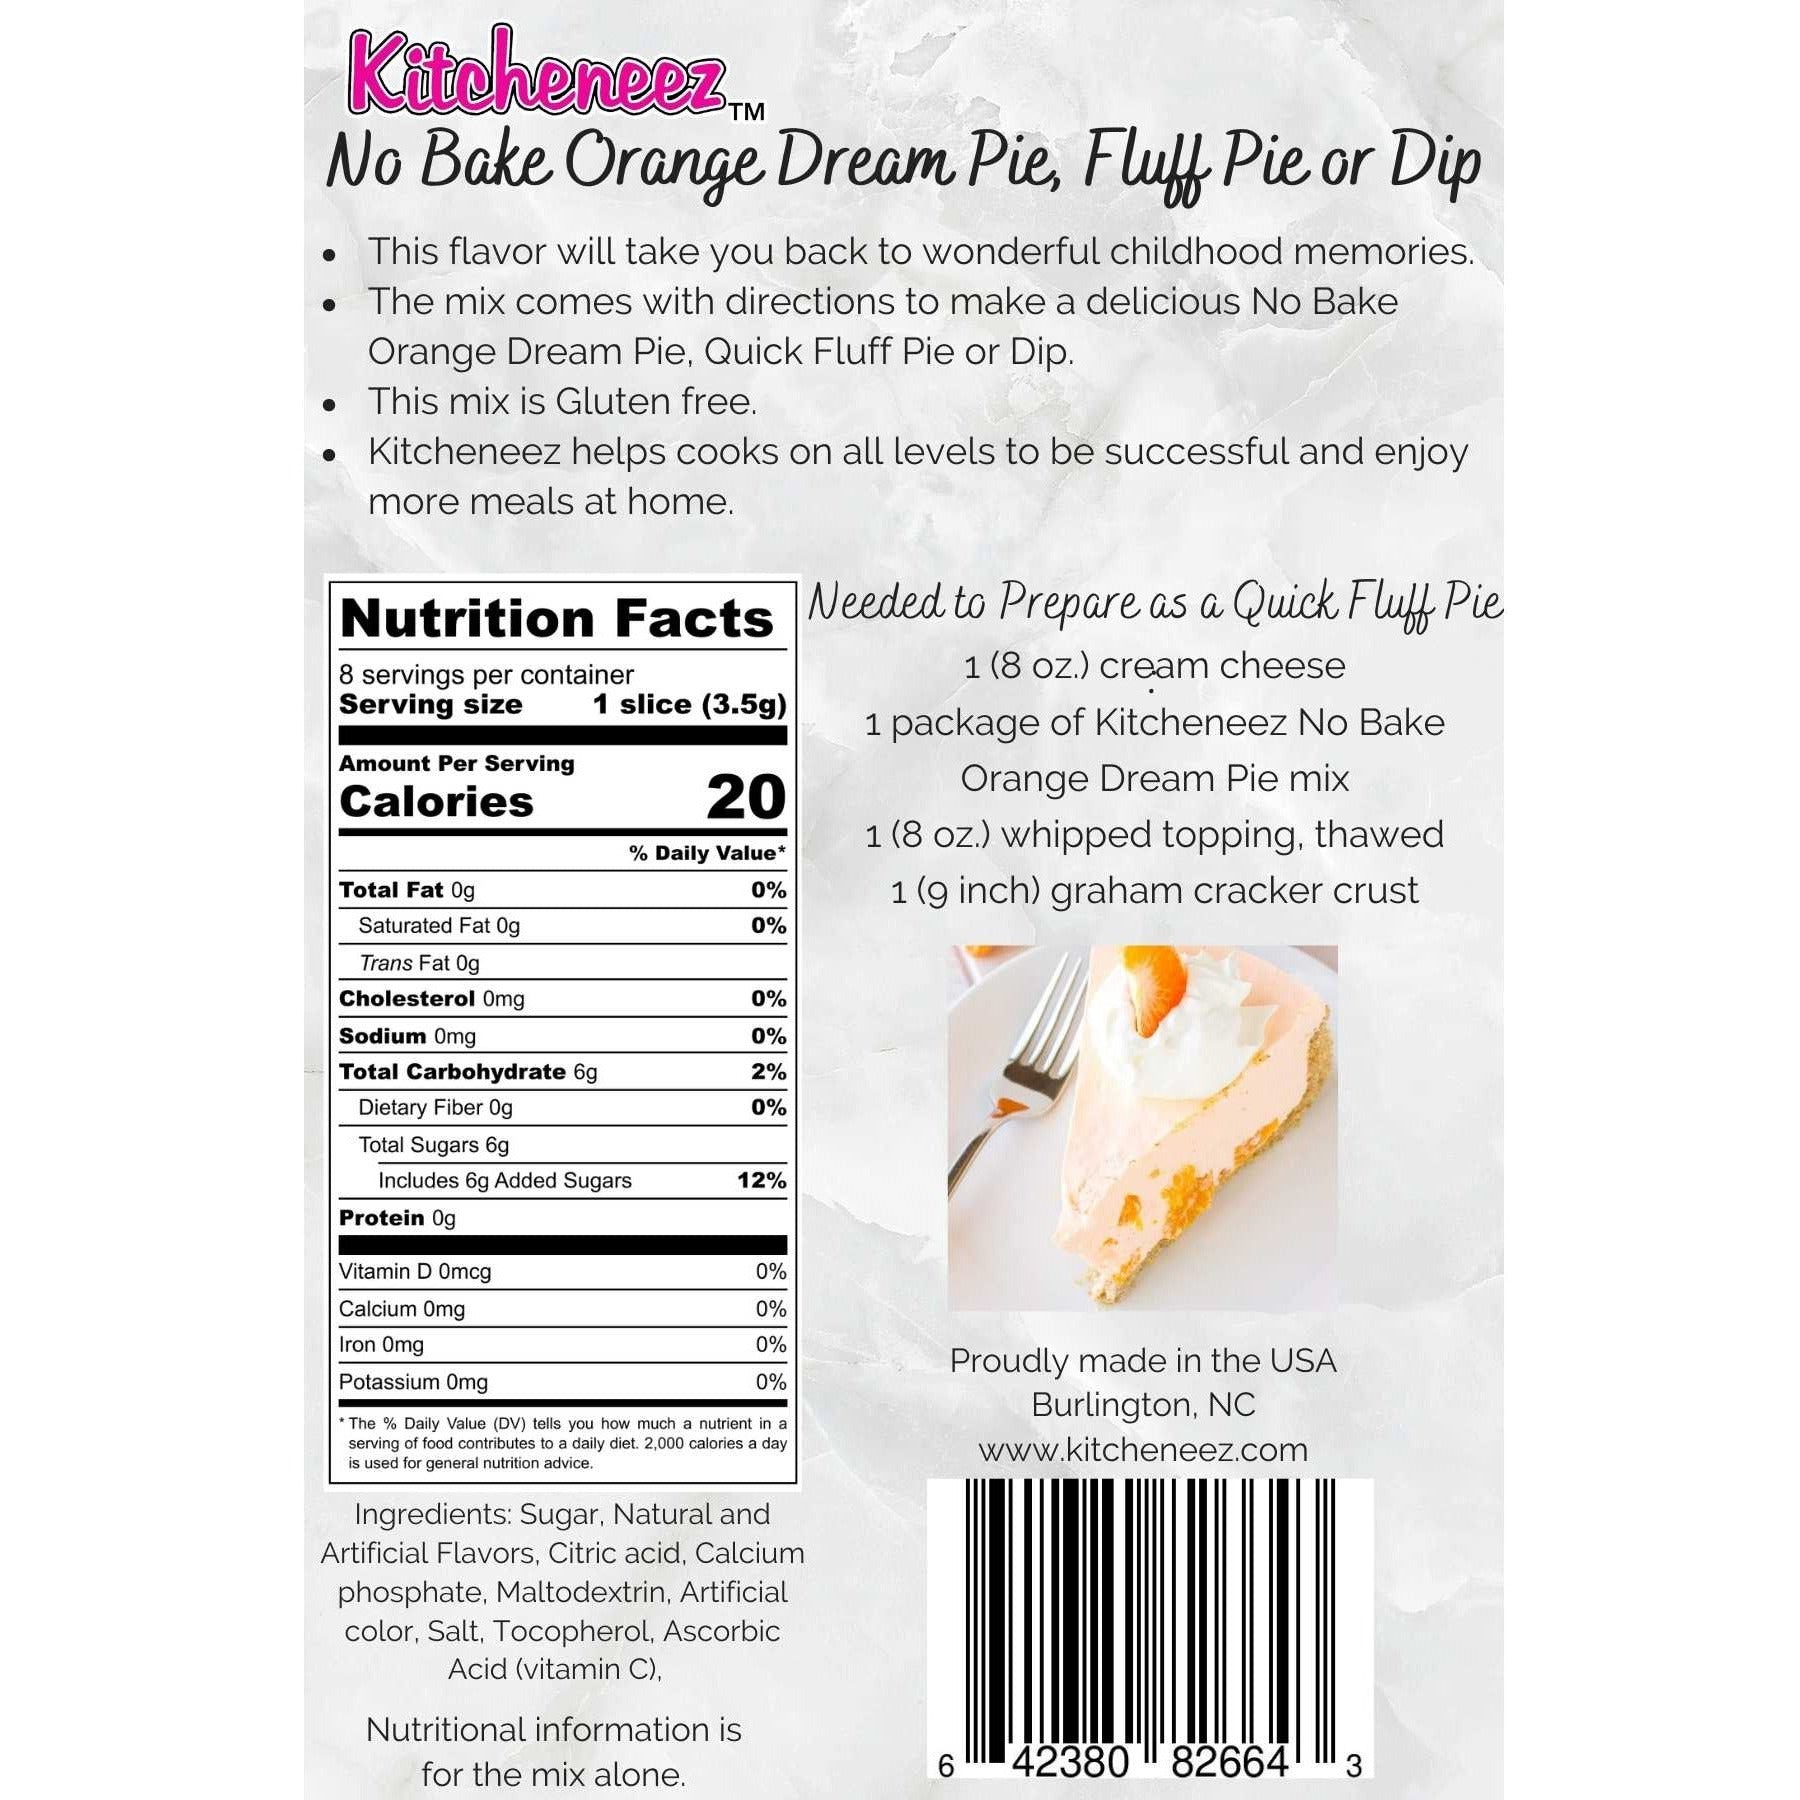 No Bake Orange Dream Pie with Quick Pie & Dip recipes included - Kitcheneez Mixes & More!